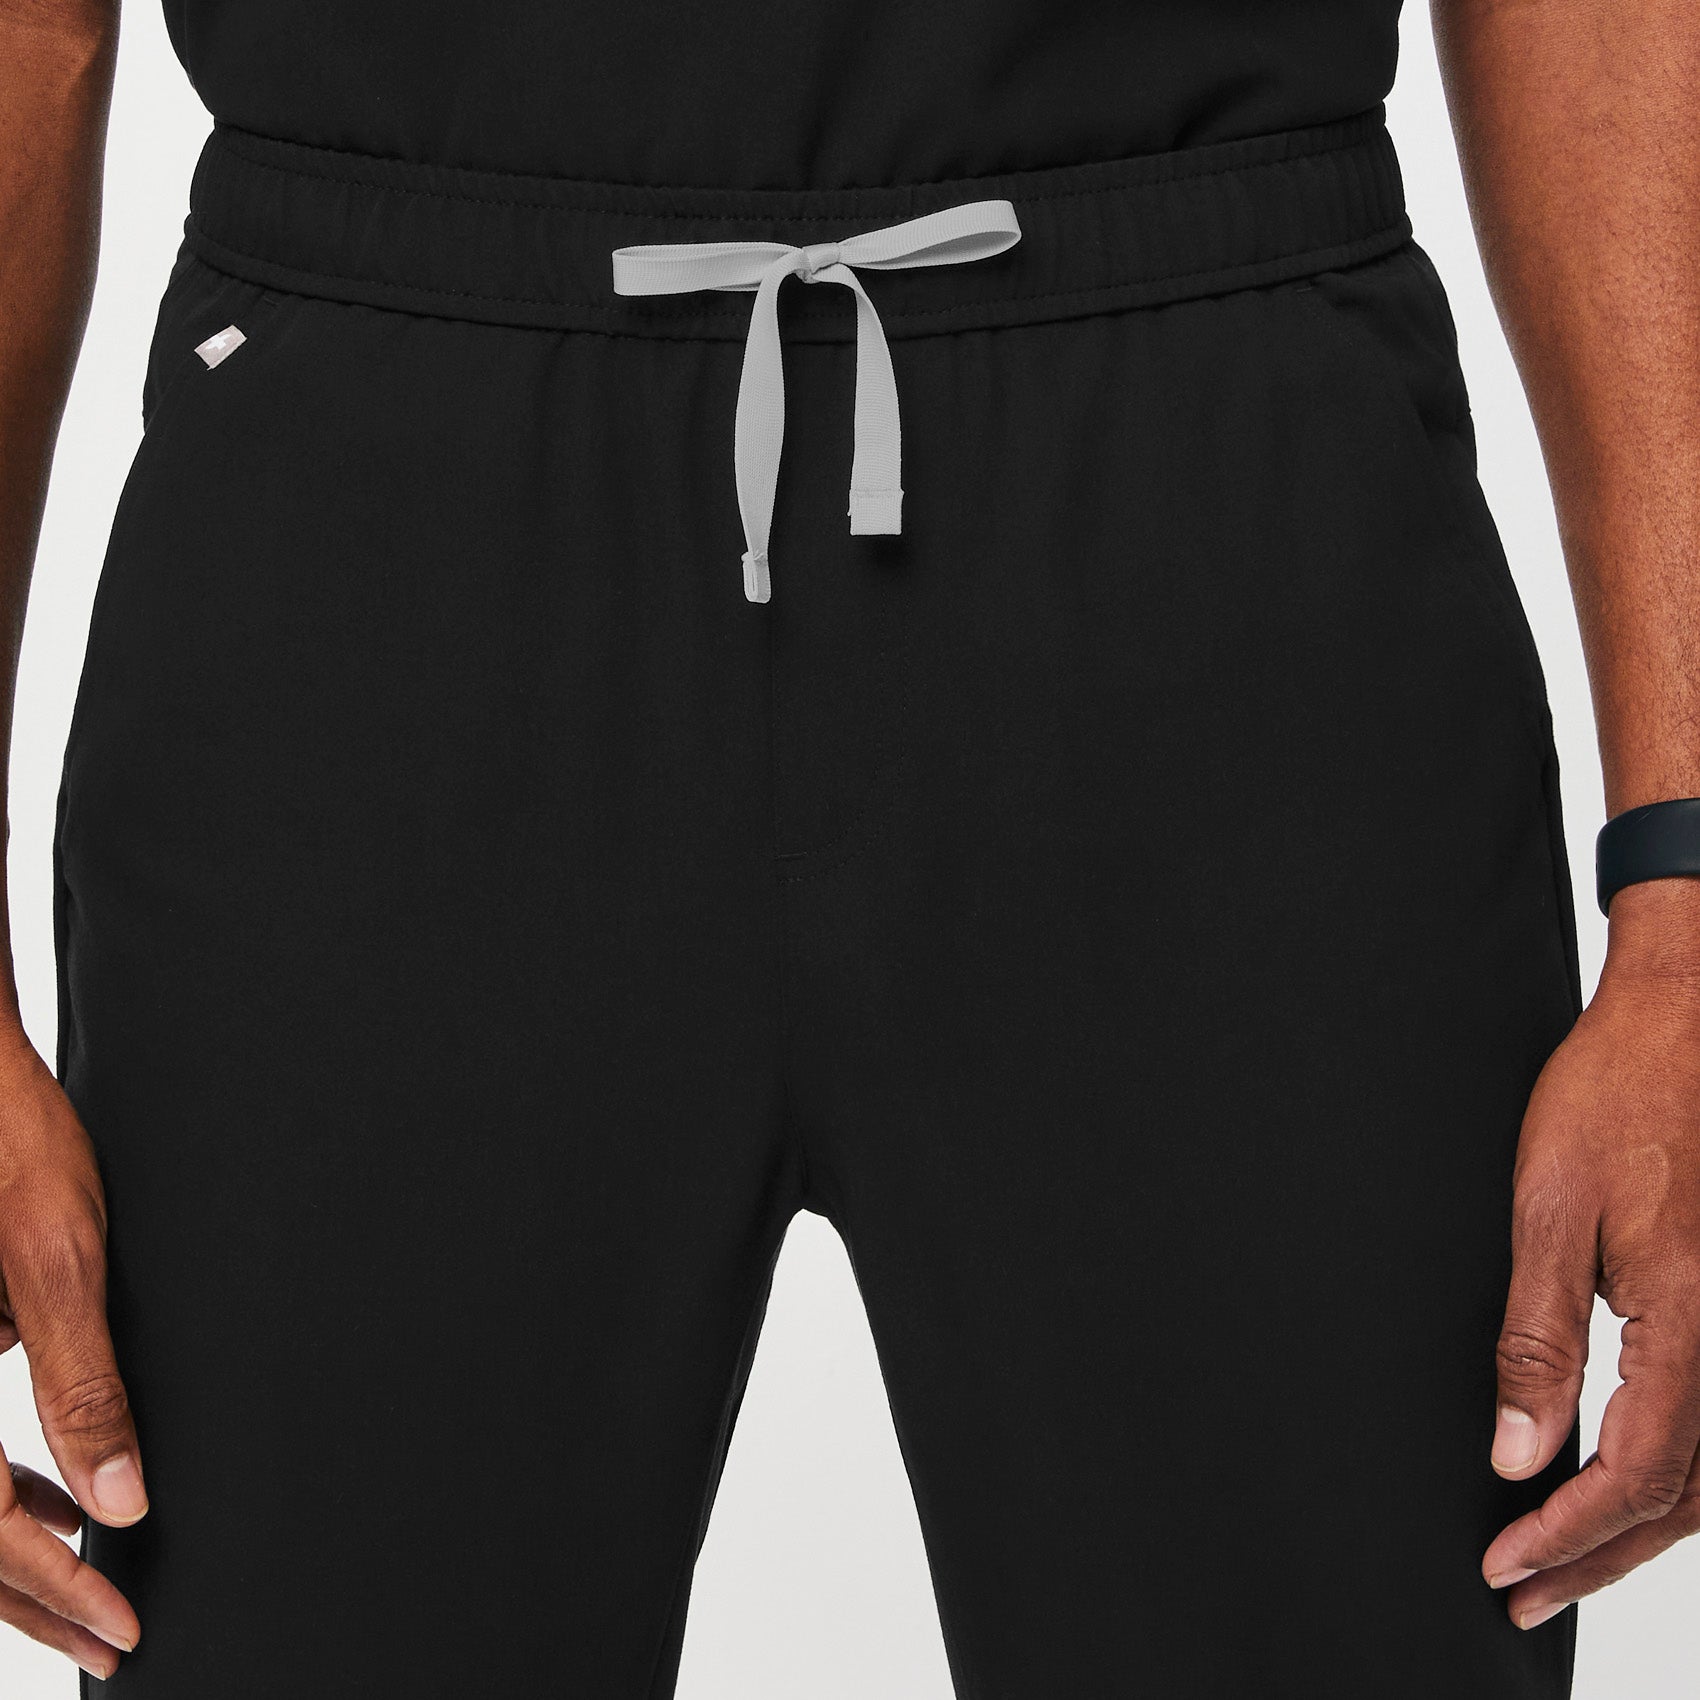 FIGS Tansen Jogger Scrub Pants for Men - Black, Tall XS : Buy